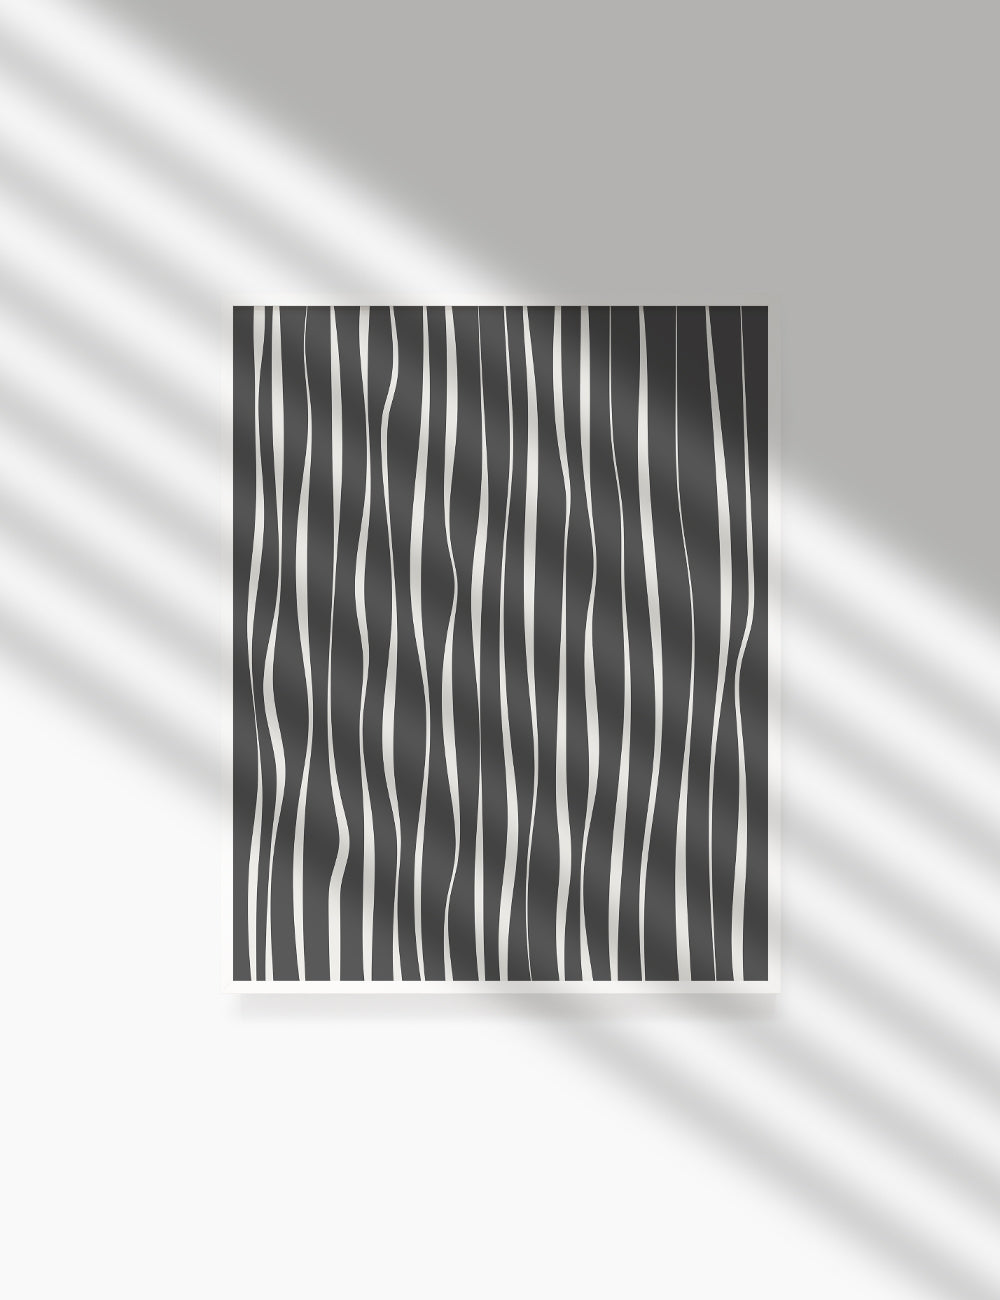 ABSTRACT MINIMAL WAVY LINES. Boho Art. Print. Printable Wall Art Illustration. Wavy lines in dark grey and beige. Abstract art. Minimal design. Minimalist, abstract illustration art. Printable poster. | PAPER MOON Art & Design